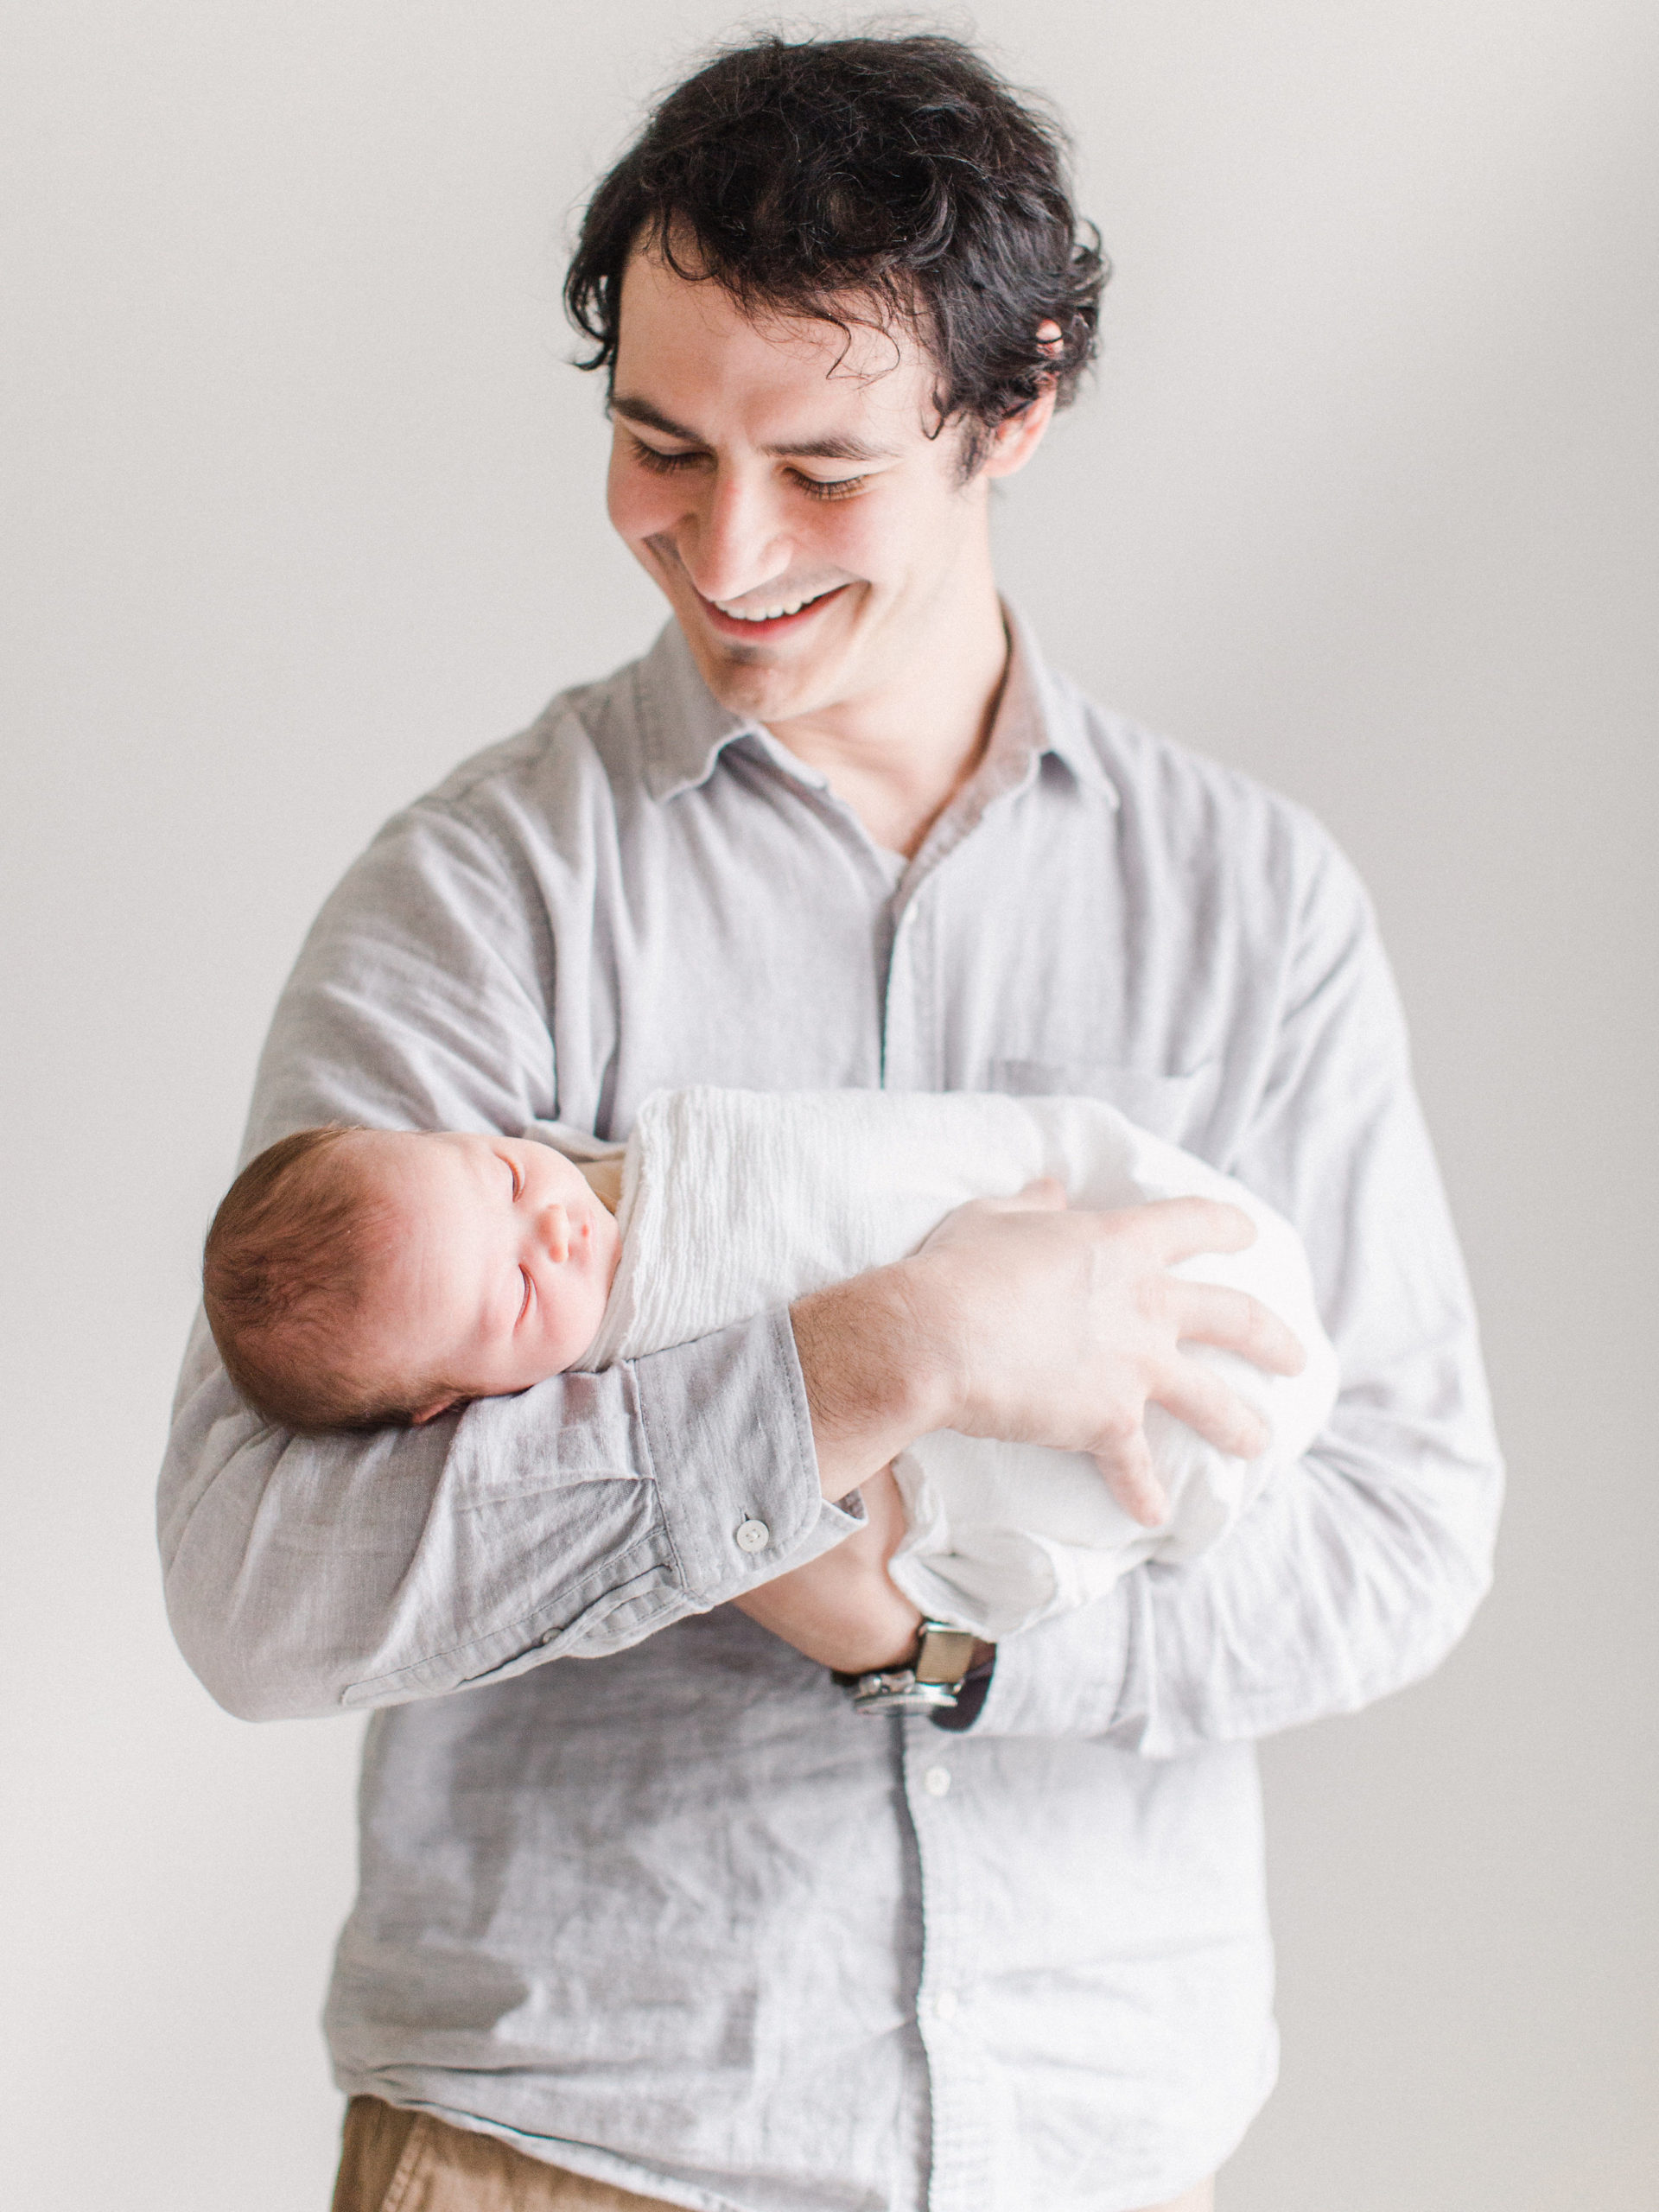 Simple portrait of dad with newborn